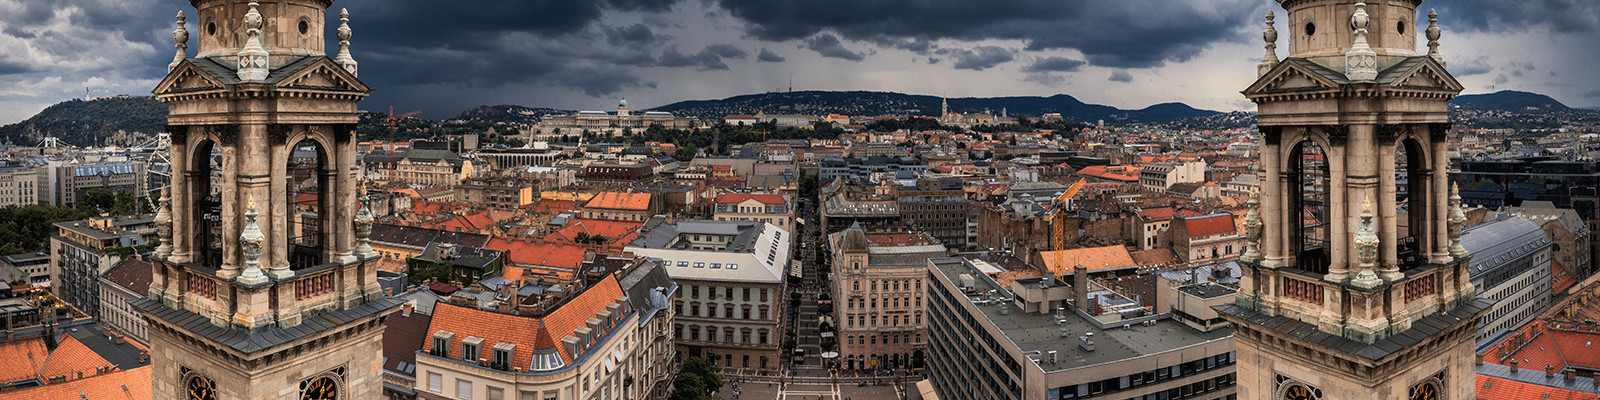 History of Budapest